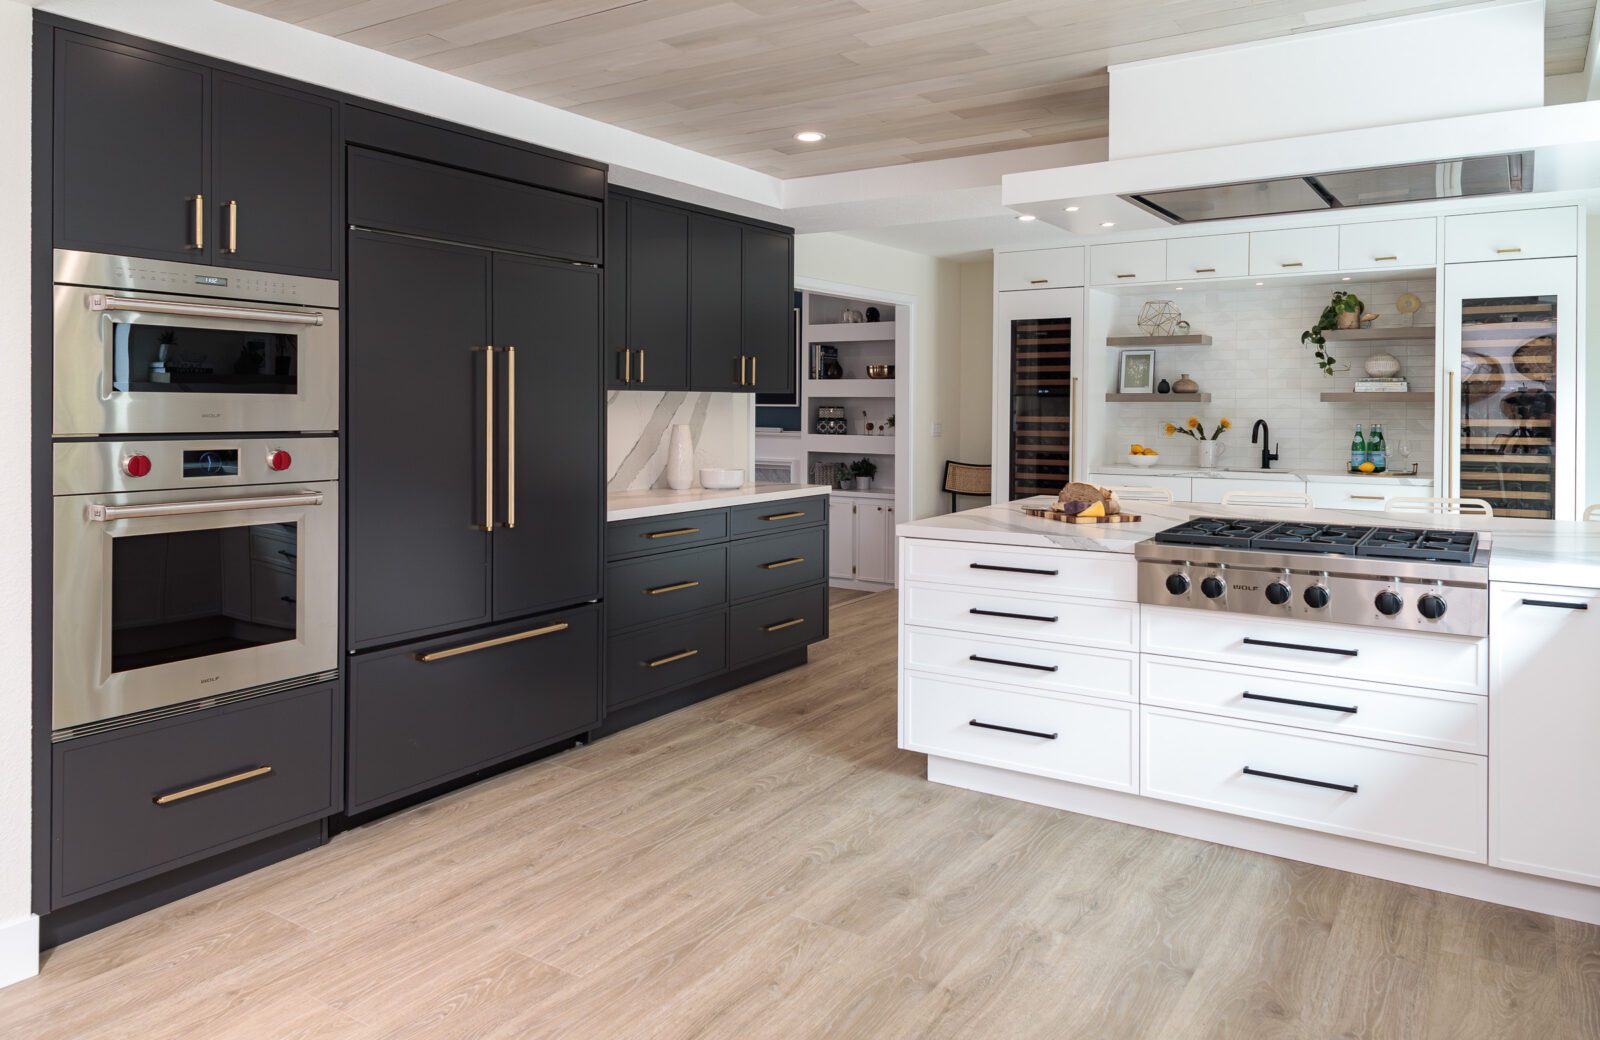 Large kitchen with Wolf cooktop, paneled Sub Zero fridge and freezer, ceiling mounted hood, light LVP floors